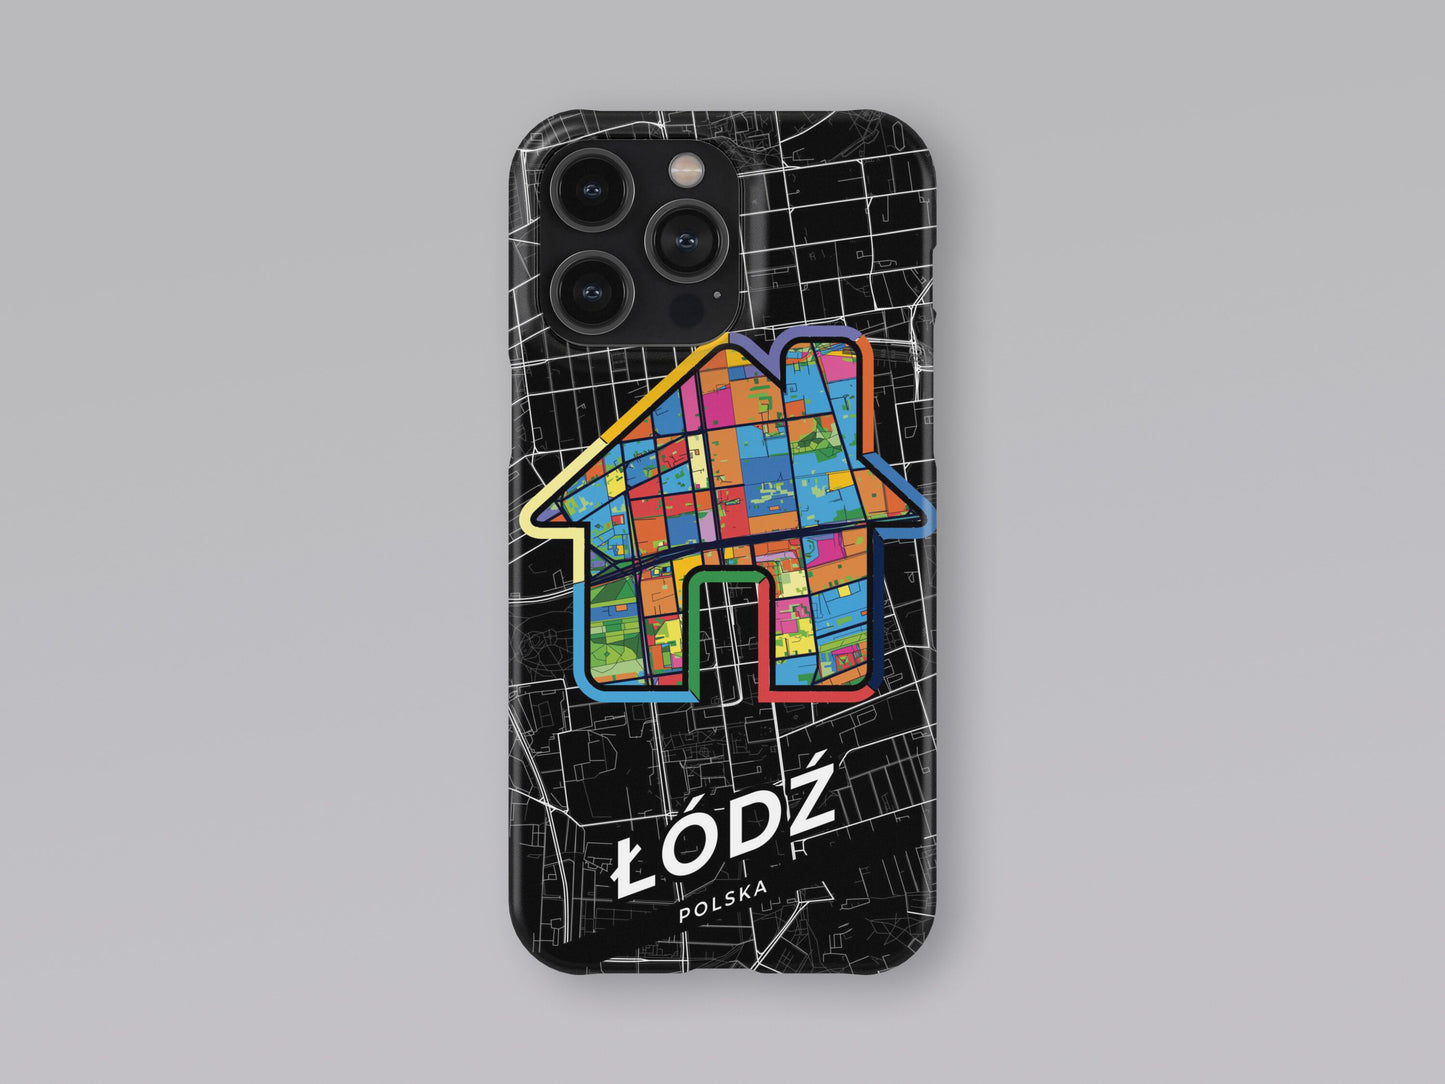 Łódź Poland slim phone case with colorful icon 3